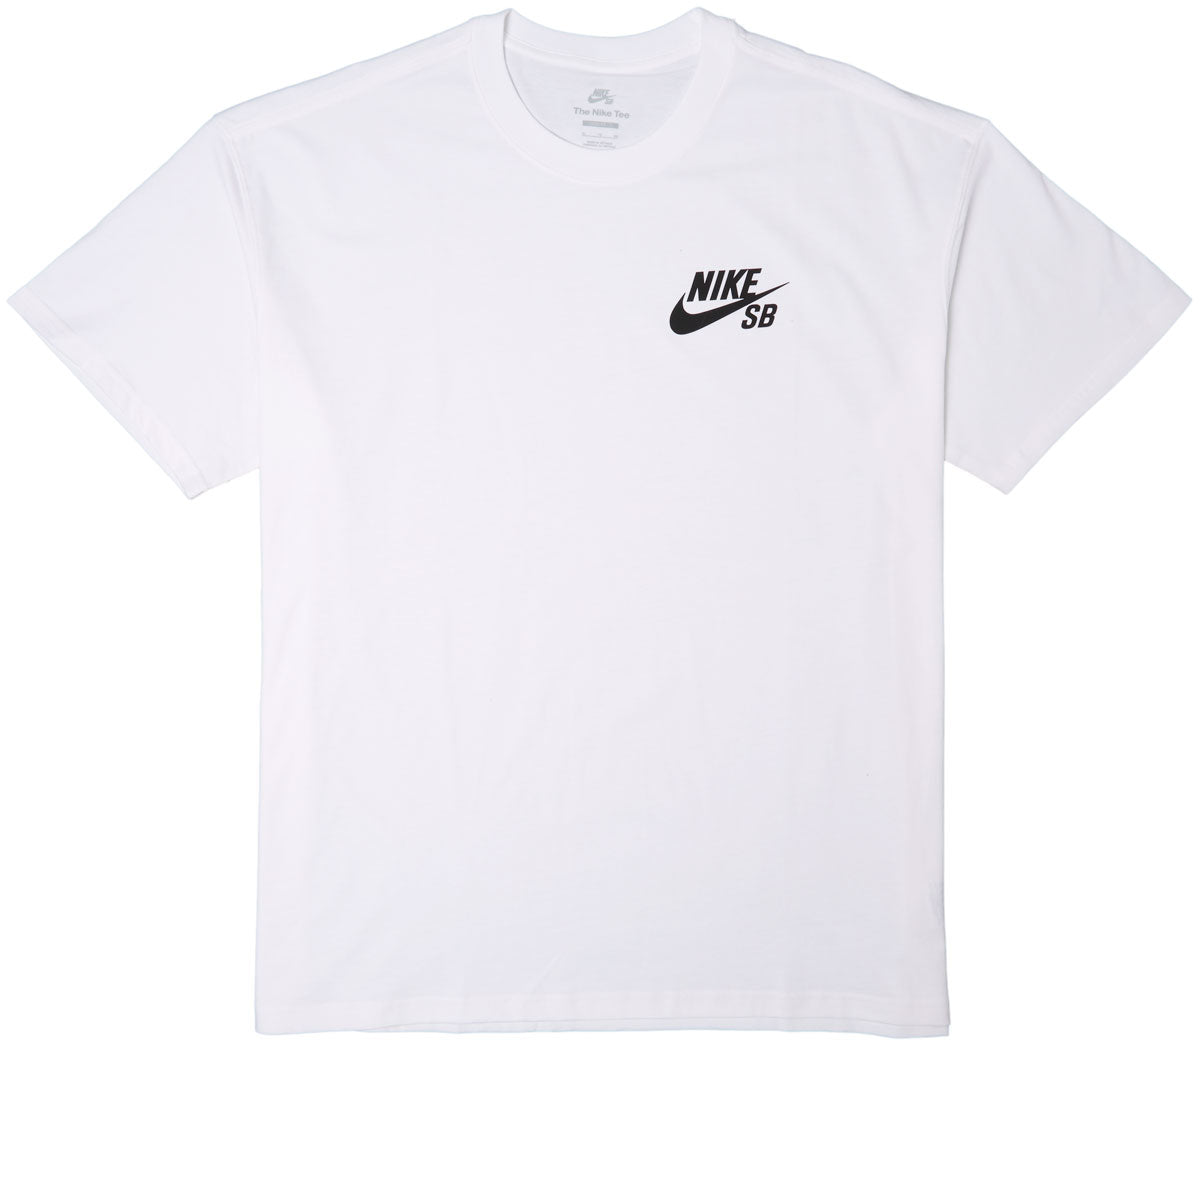 Nike SB New Logo T-Shirt - White/Black image 1